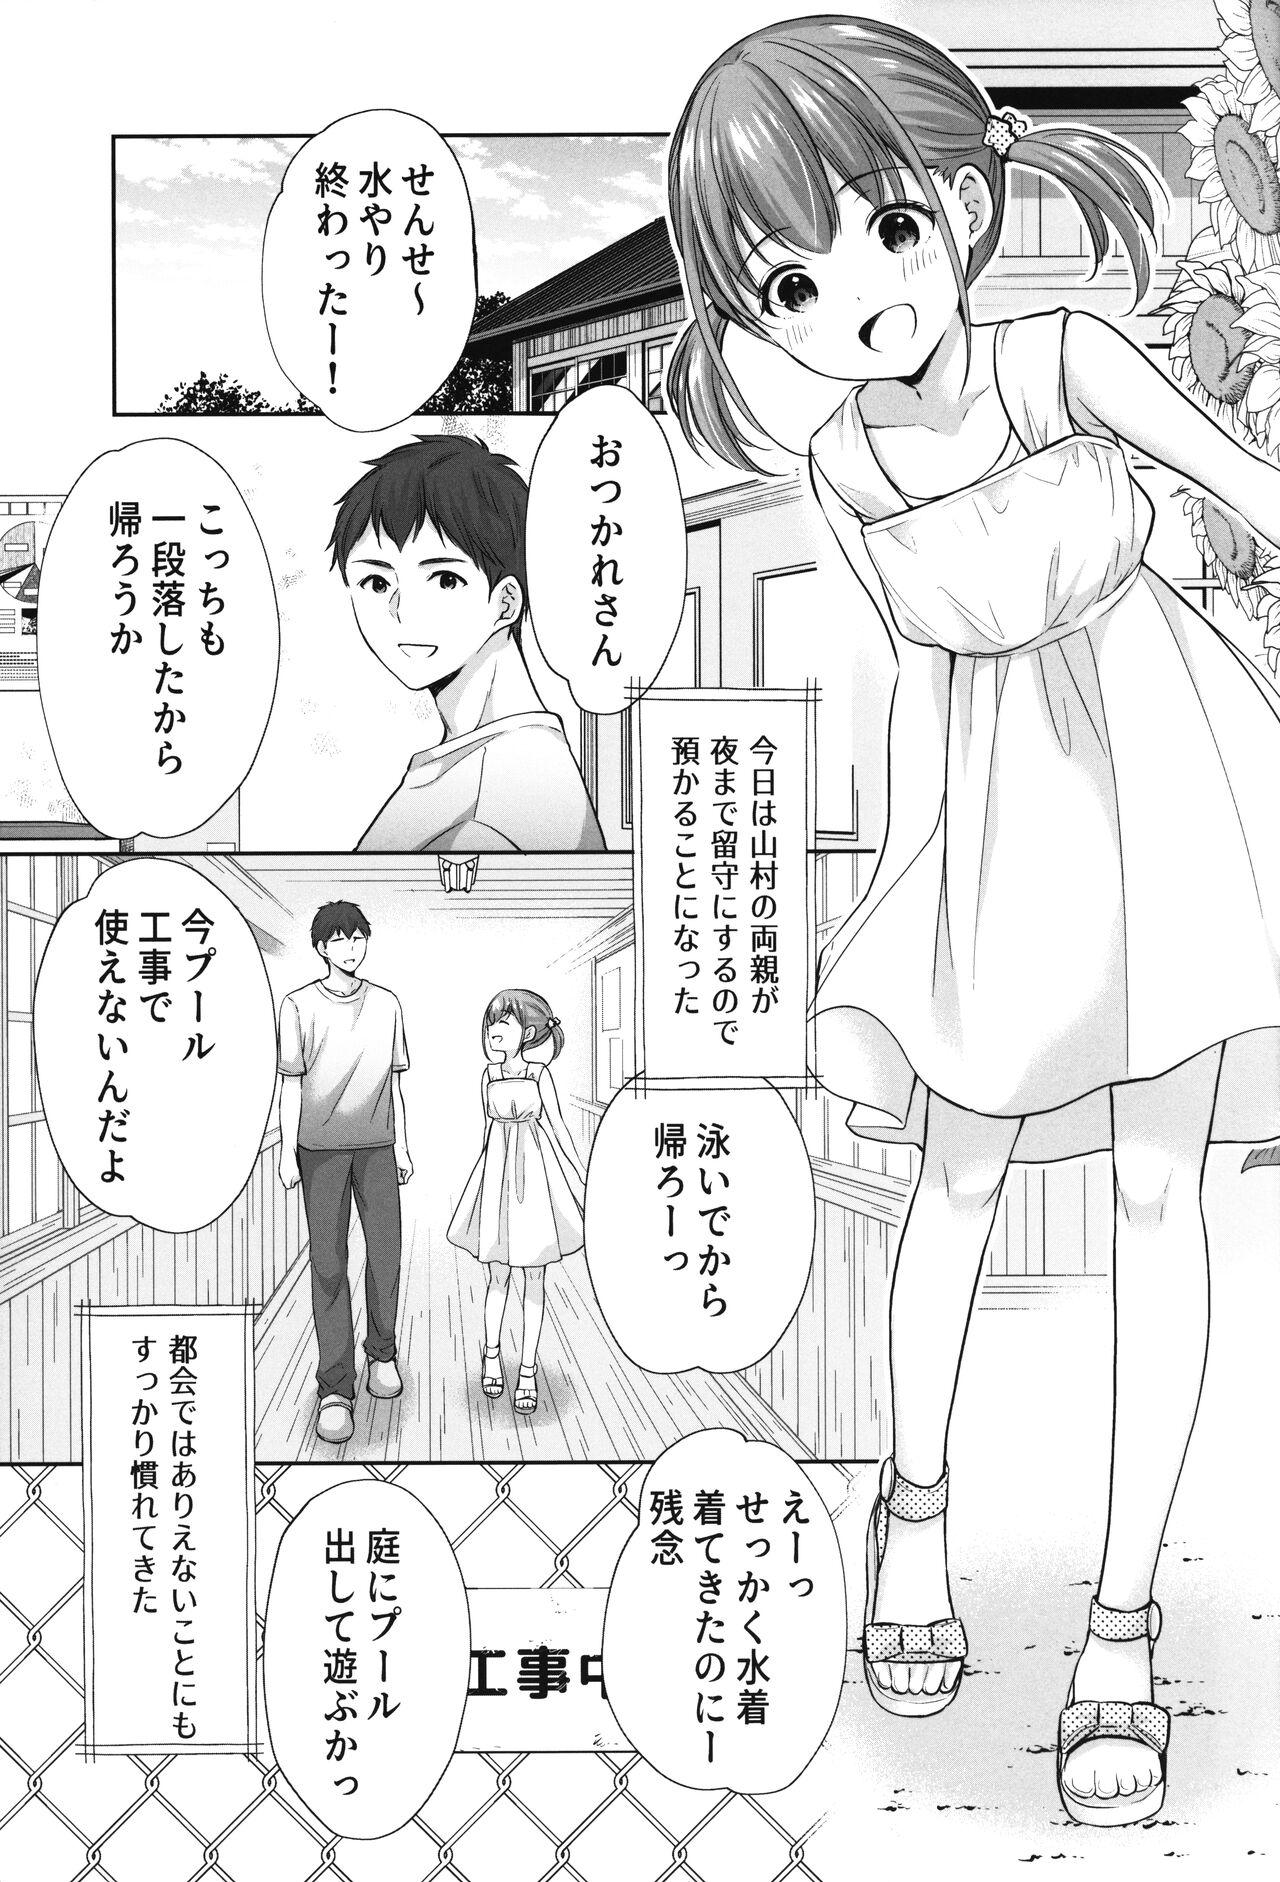 Stripping Ayamachi wa Himegoto no Hajimari 6 - Original Periscope - Page 4